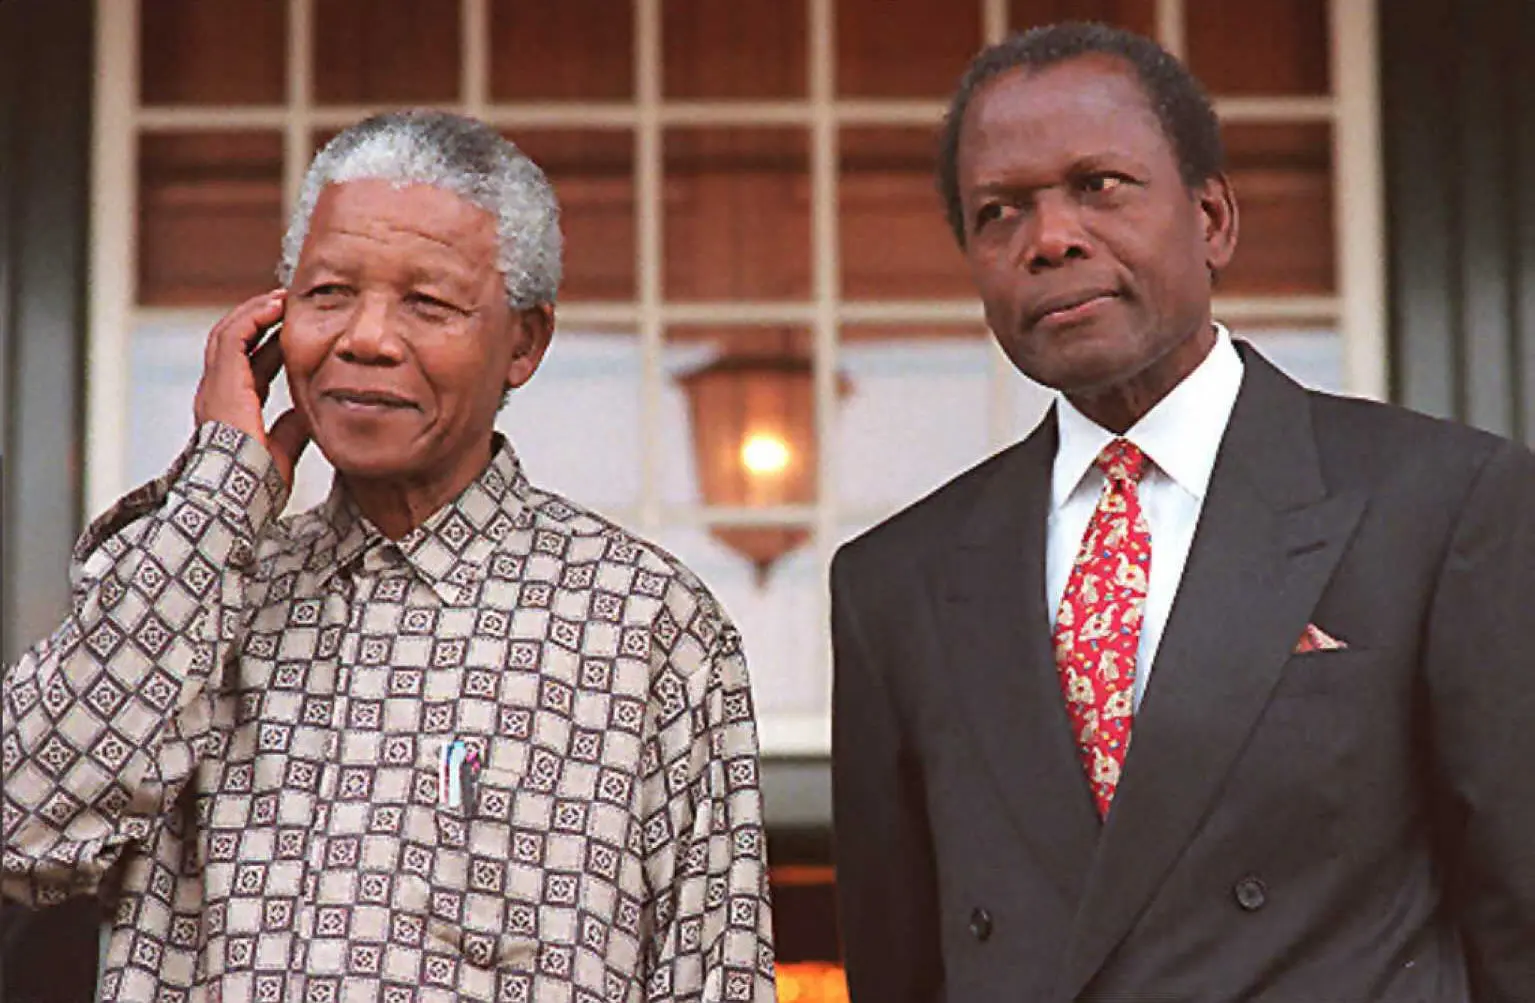 Sidney Poitier and Nelson Mandela